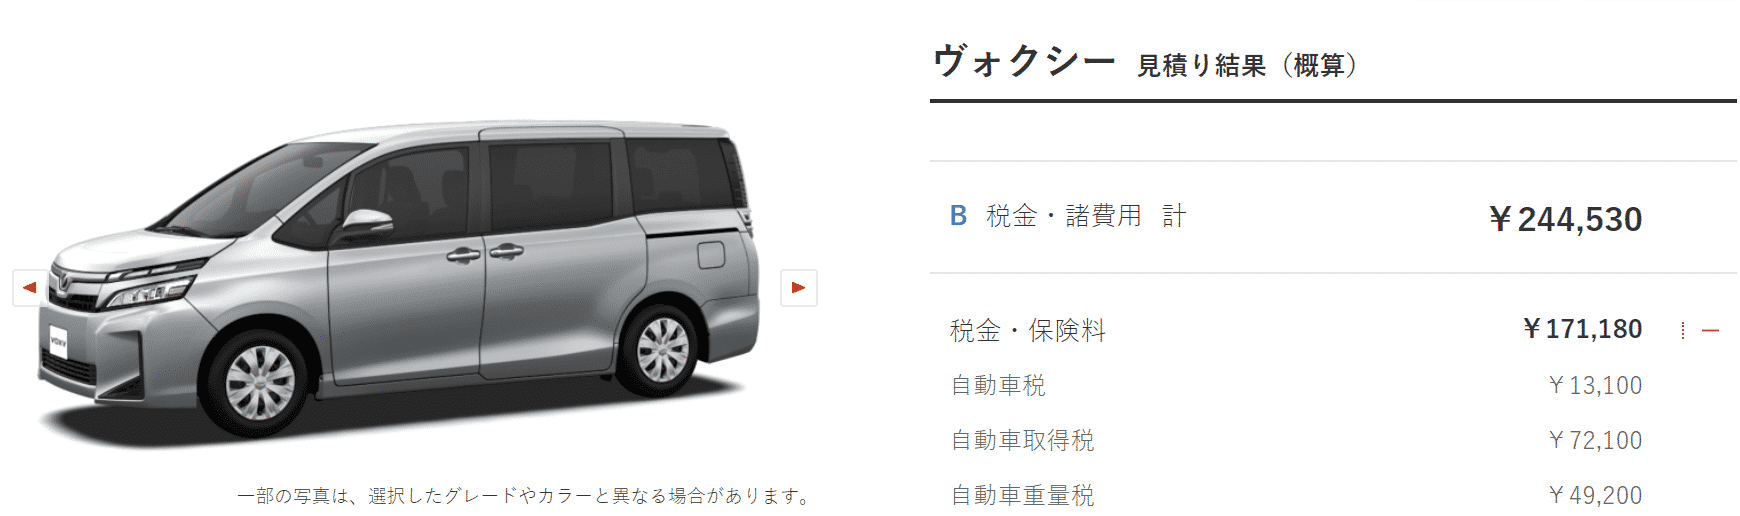 「Xiサイドリフトアップチルトシート装着車」の税額画像